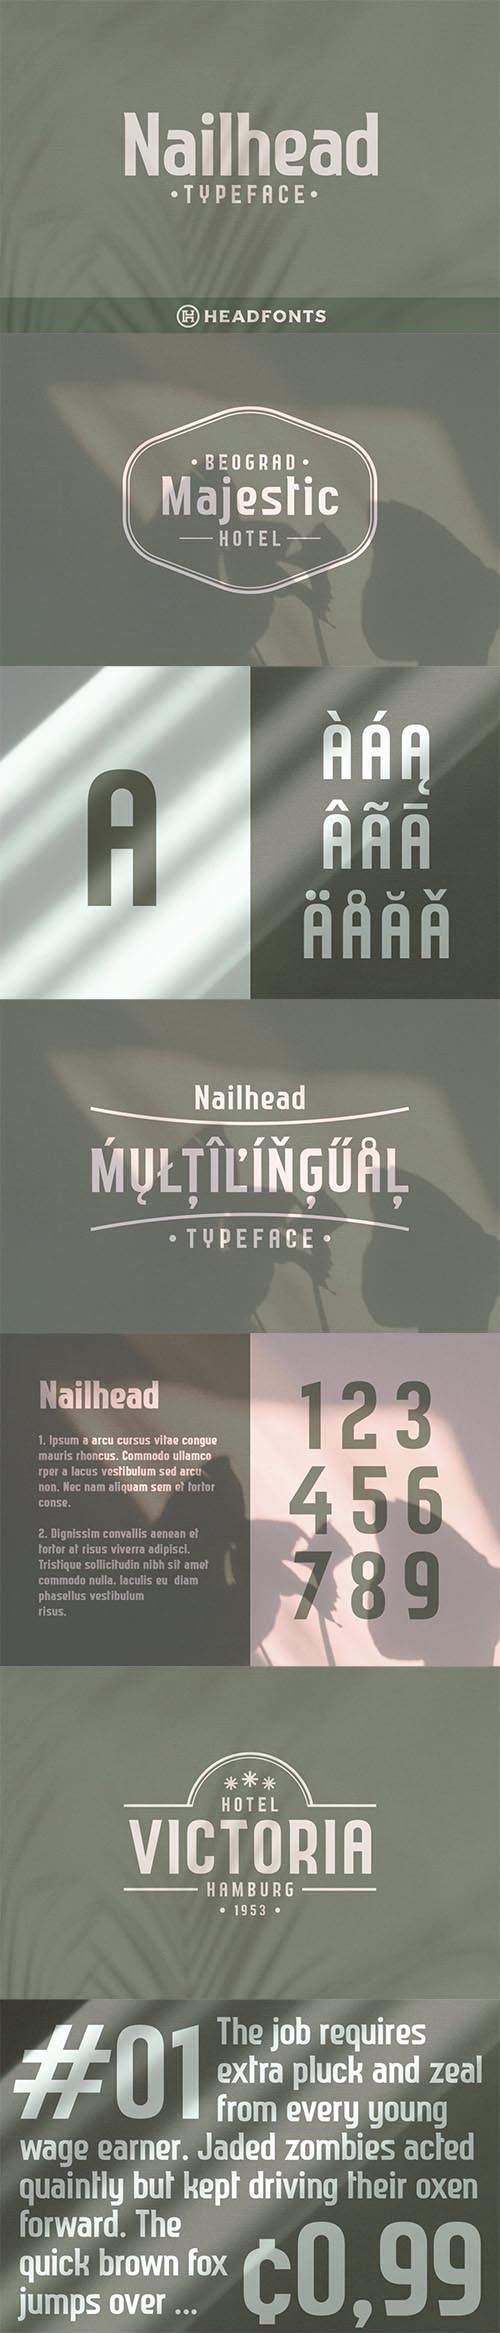 Nailhead Modern Wedding Typeface